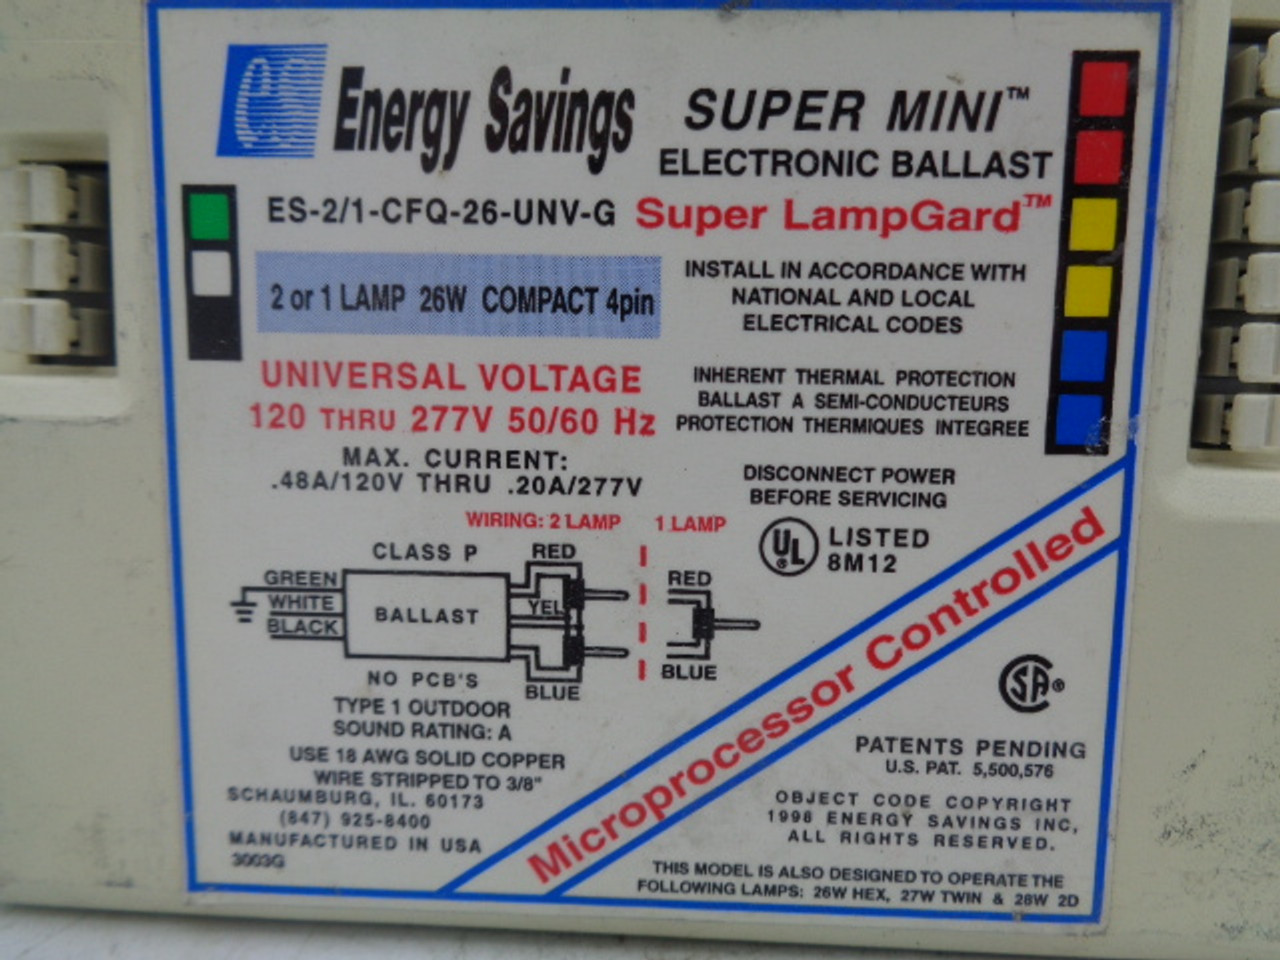 (25) Energy Savings ES-2/1-CFQ-26-UNV-G Super Mini Electronic Ballast